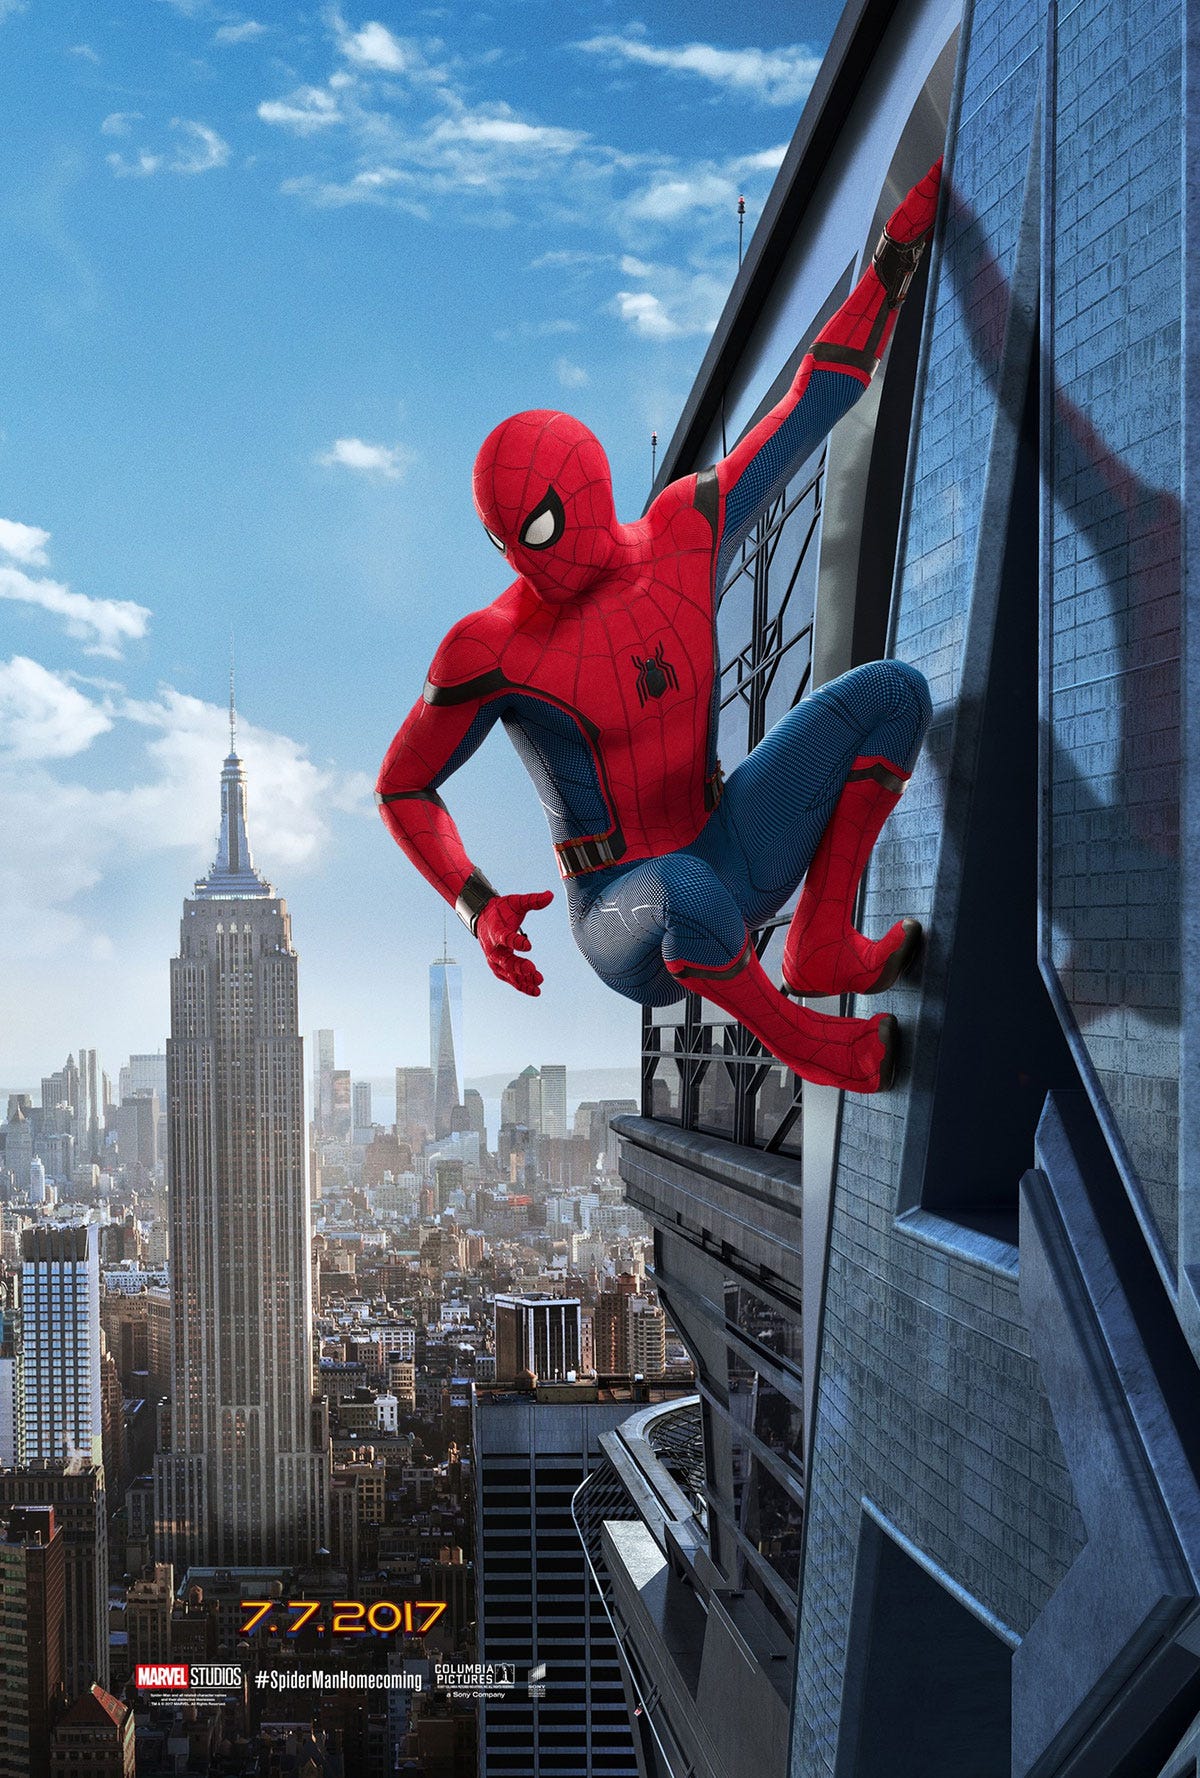 Spider-Man: Homecoming. Your Marvel Cinematic Spider-Man. | by Nigel Hall |  The Orange Blog | Medium